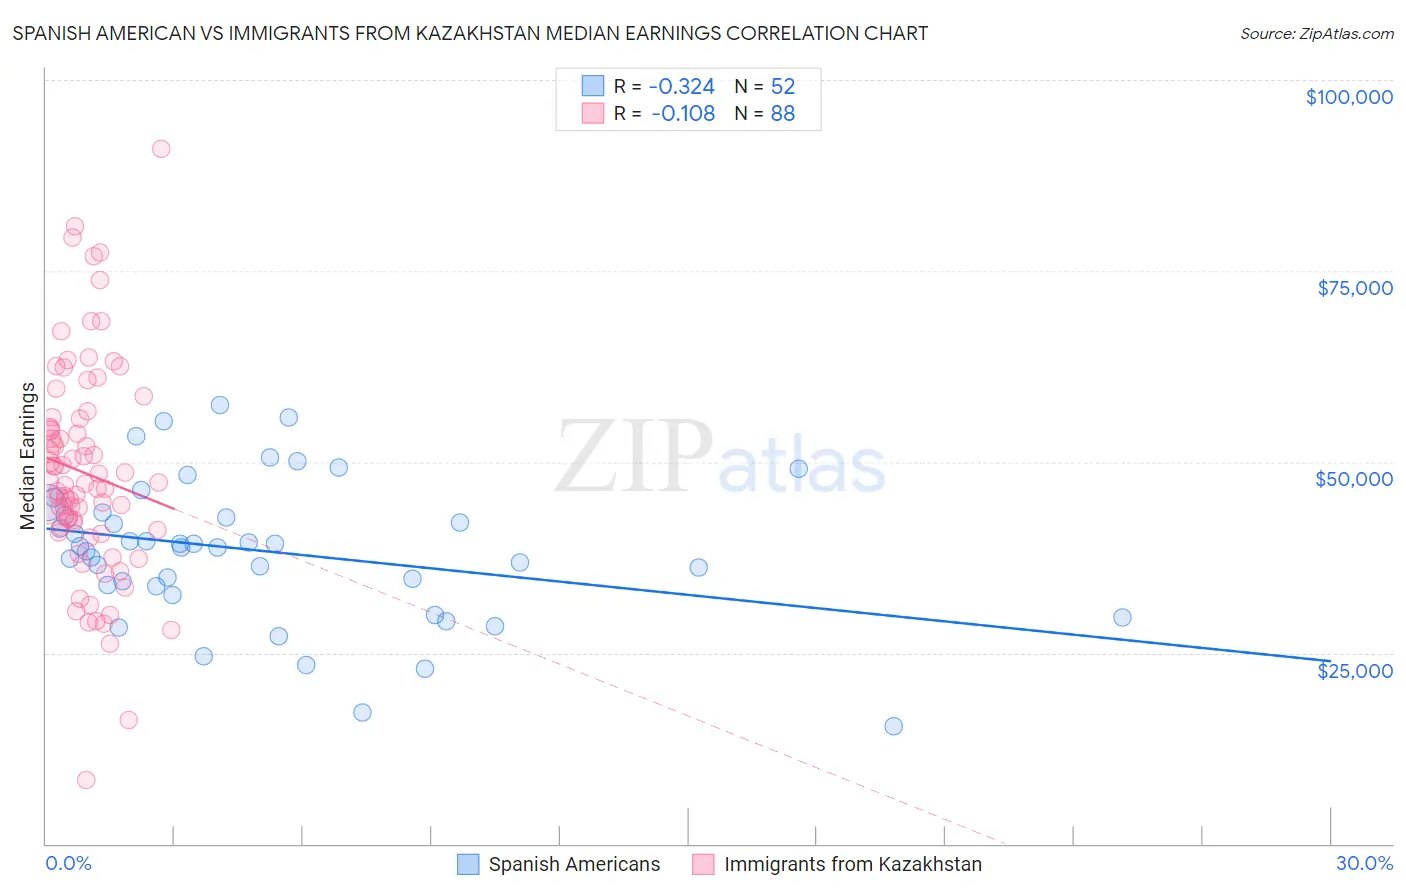 Spanish American vs Immigrants from Kazakhstan Median Earnings